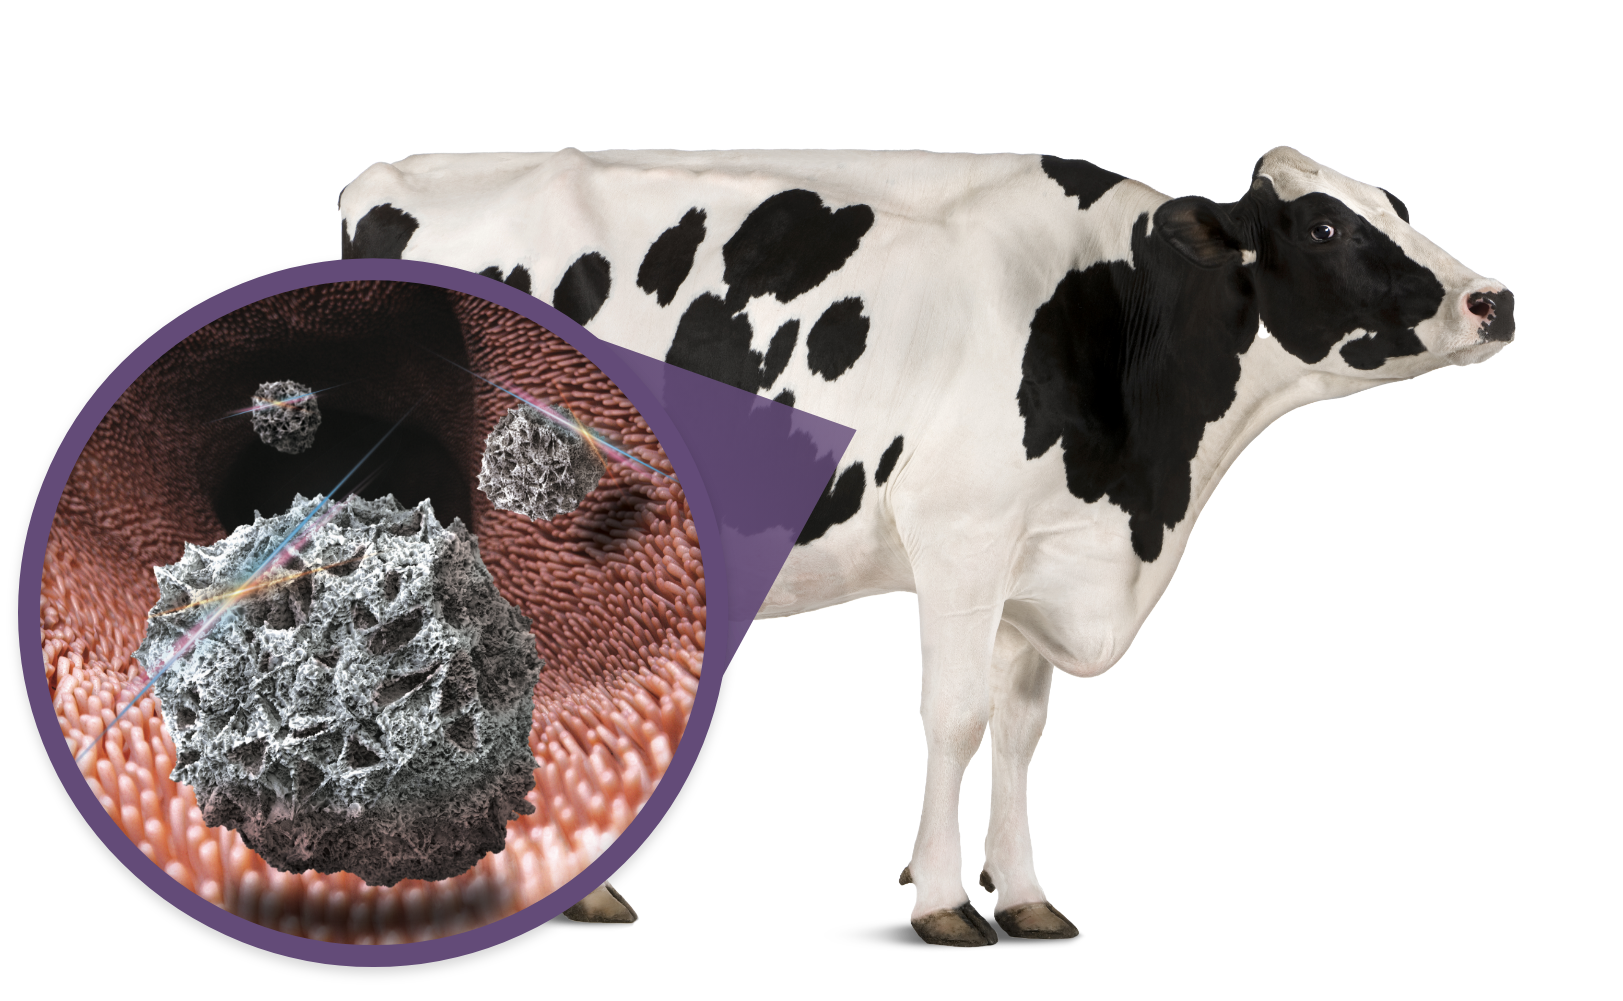 Texto explicativo do intestino roxo do lado da vaca leiteira.